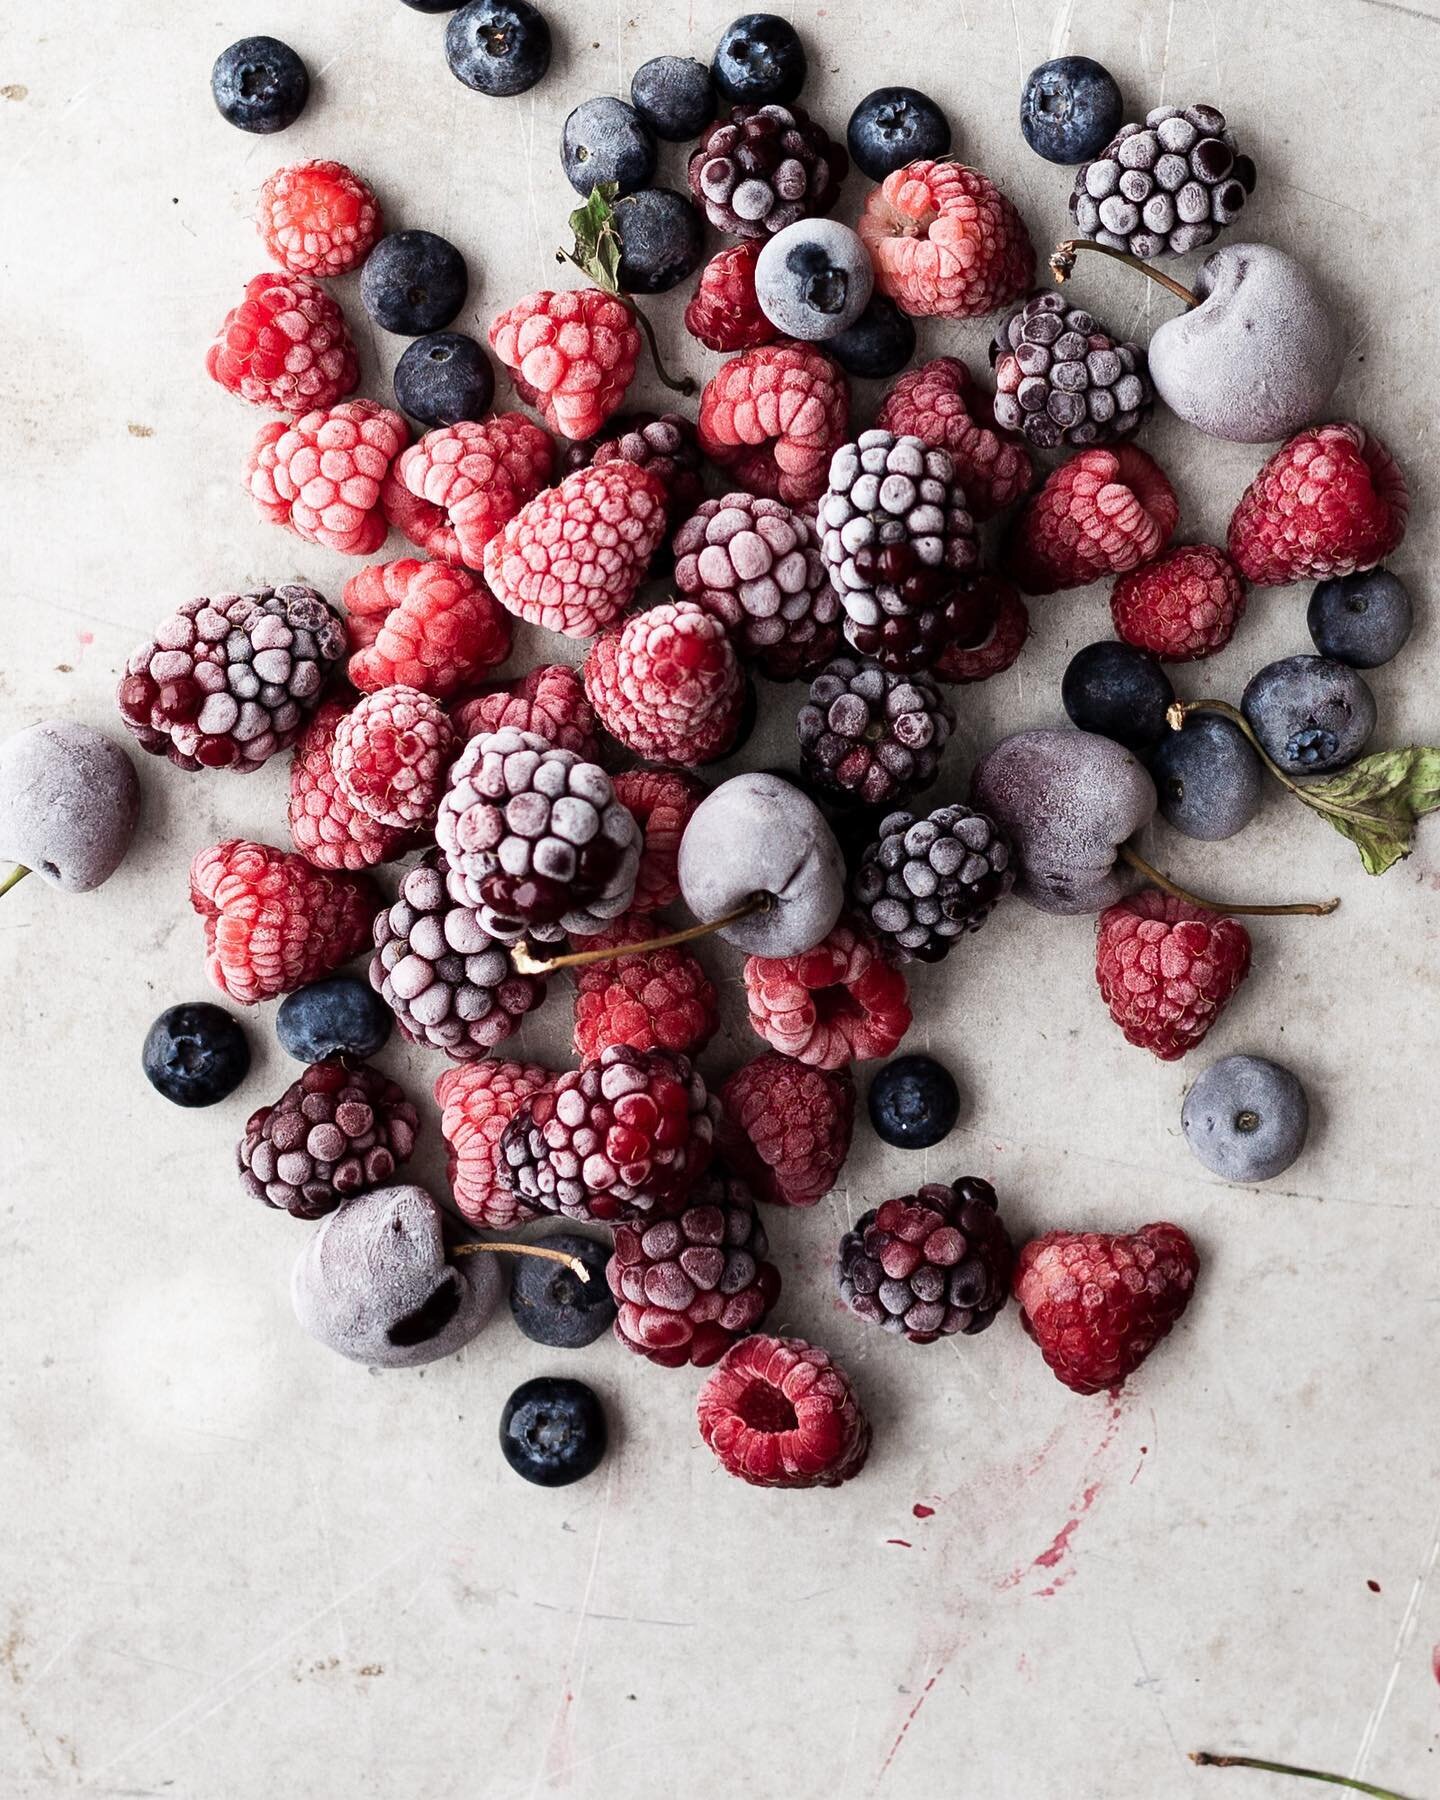 Frozen fresh berries for future desserts and smoothies🍓🍒🫐
.
.
.
.
.
#thebakefeed #minimalfoodphotos #f52community #f52grams #foodtographyschool #inseasonnow #mywilliamssonoma #vscofoodie #berries #raspberries #blueberries #cherries